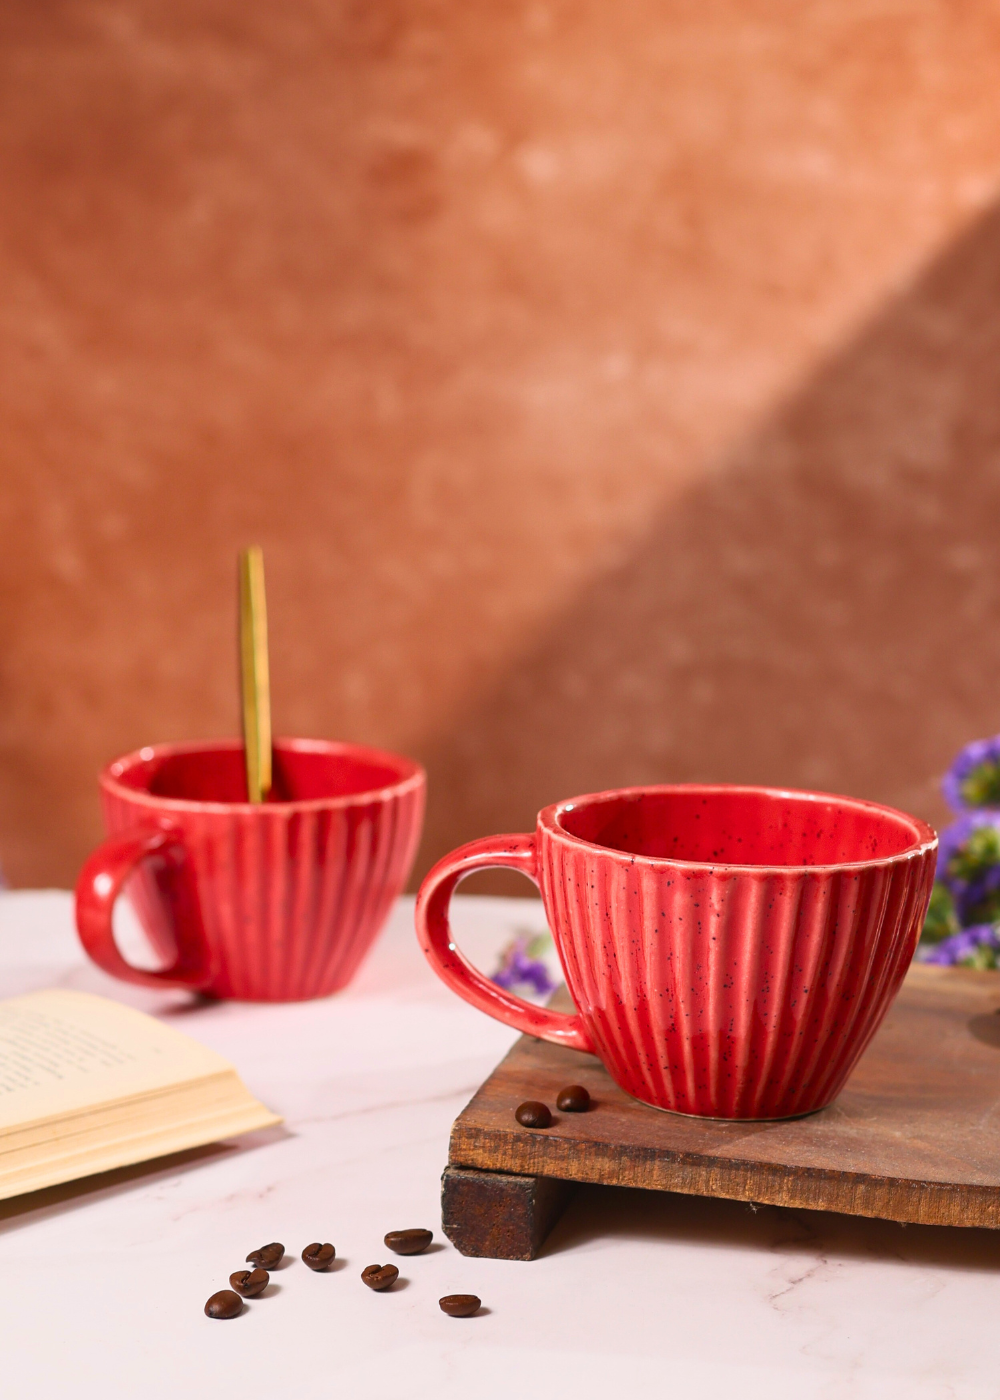 red mug with unique striped design